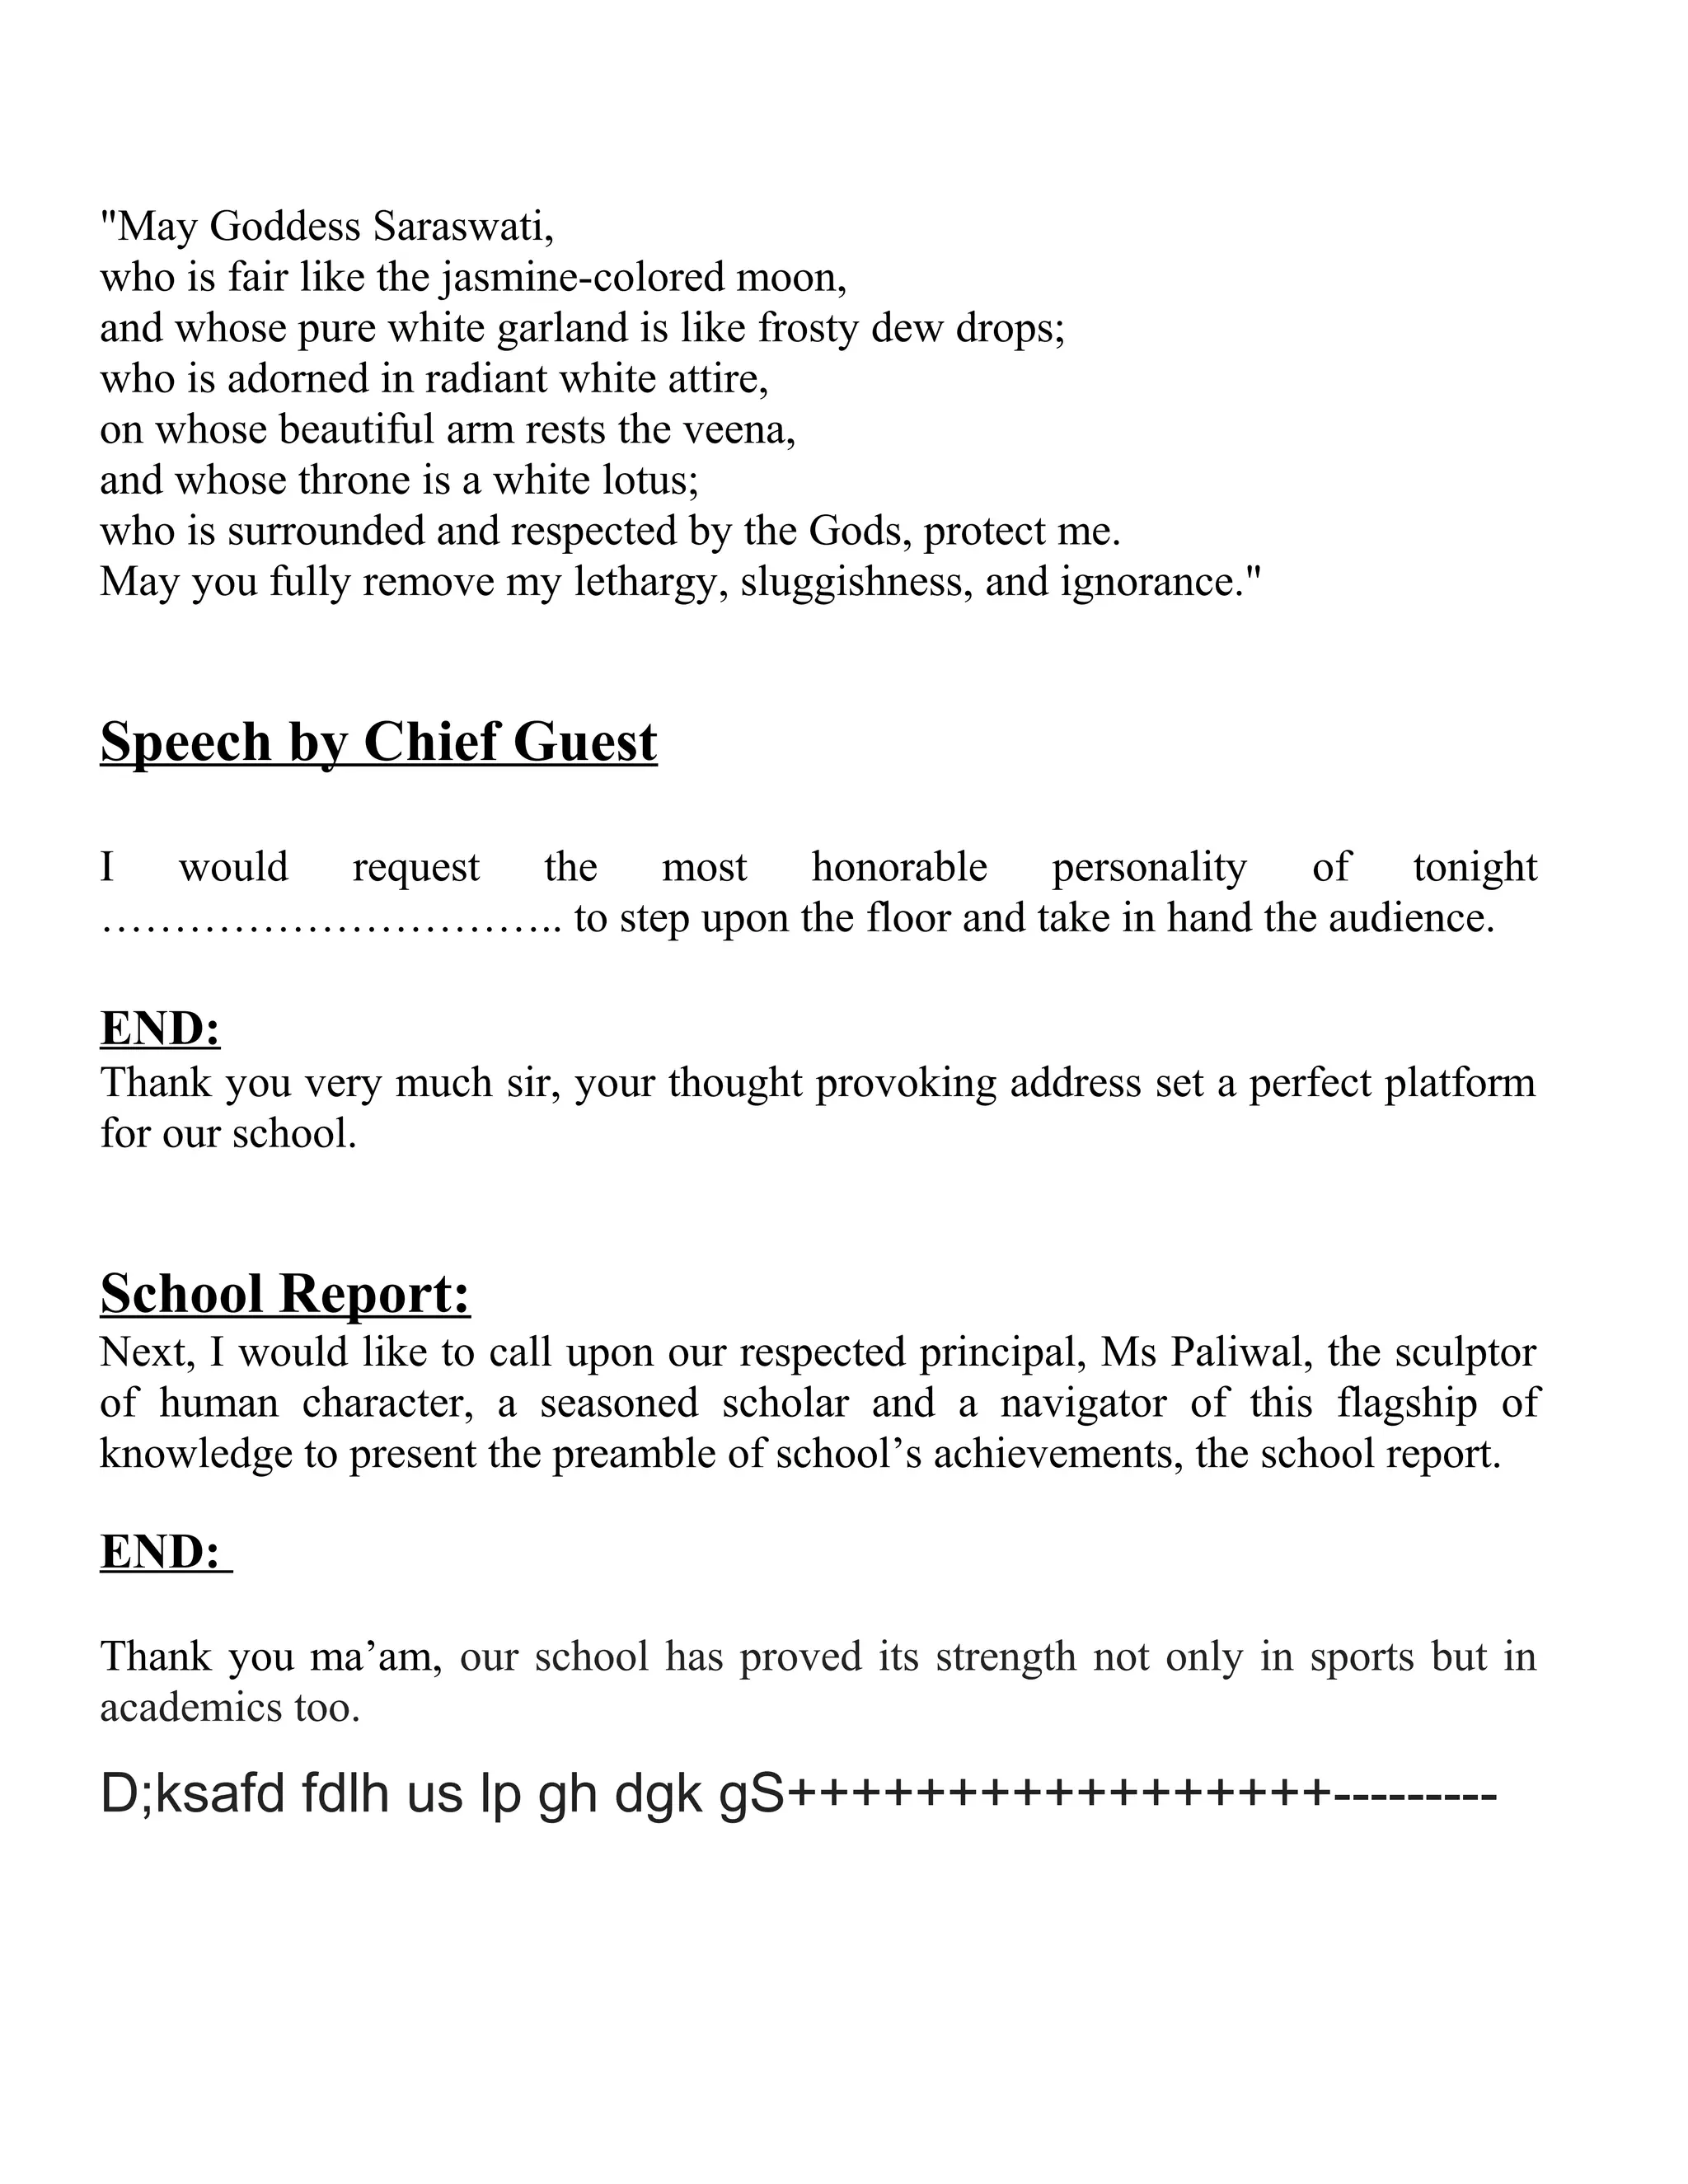 anchoring script for kindergarten annual day